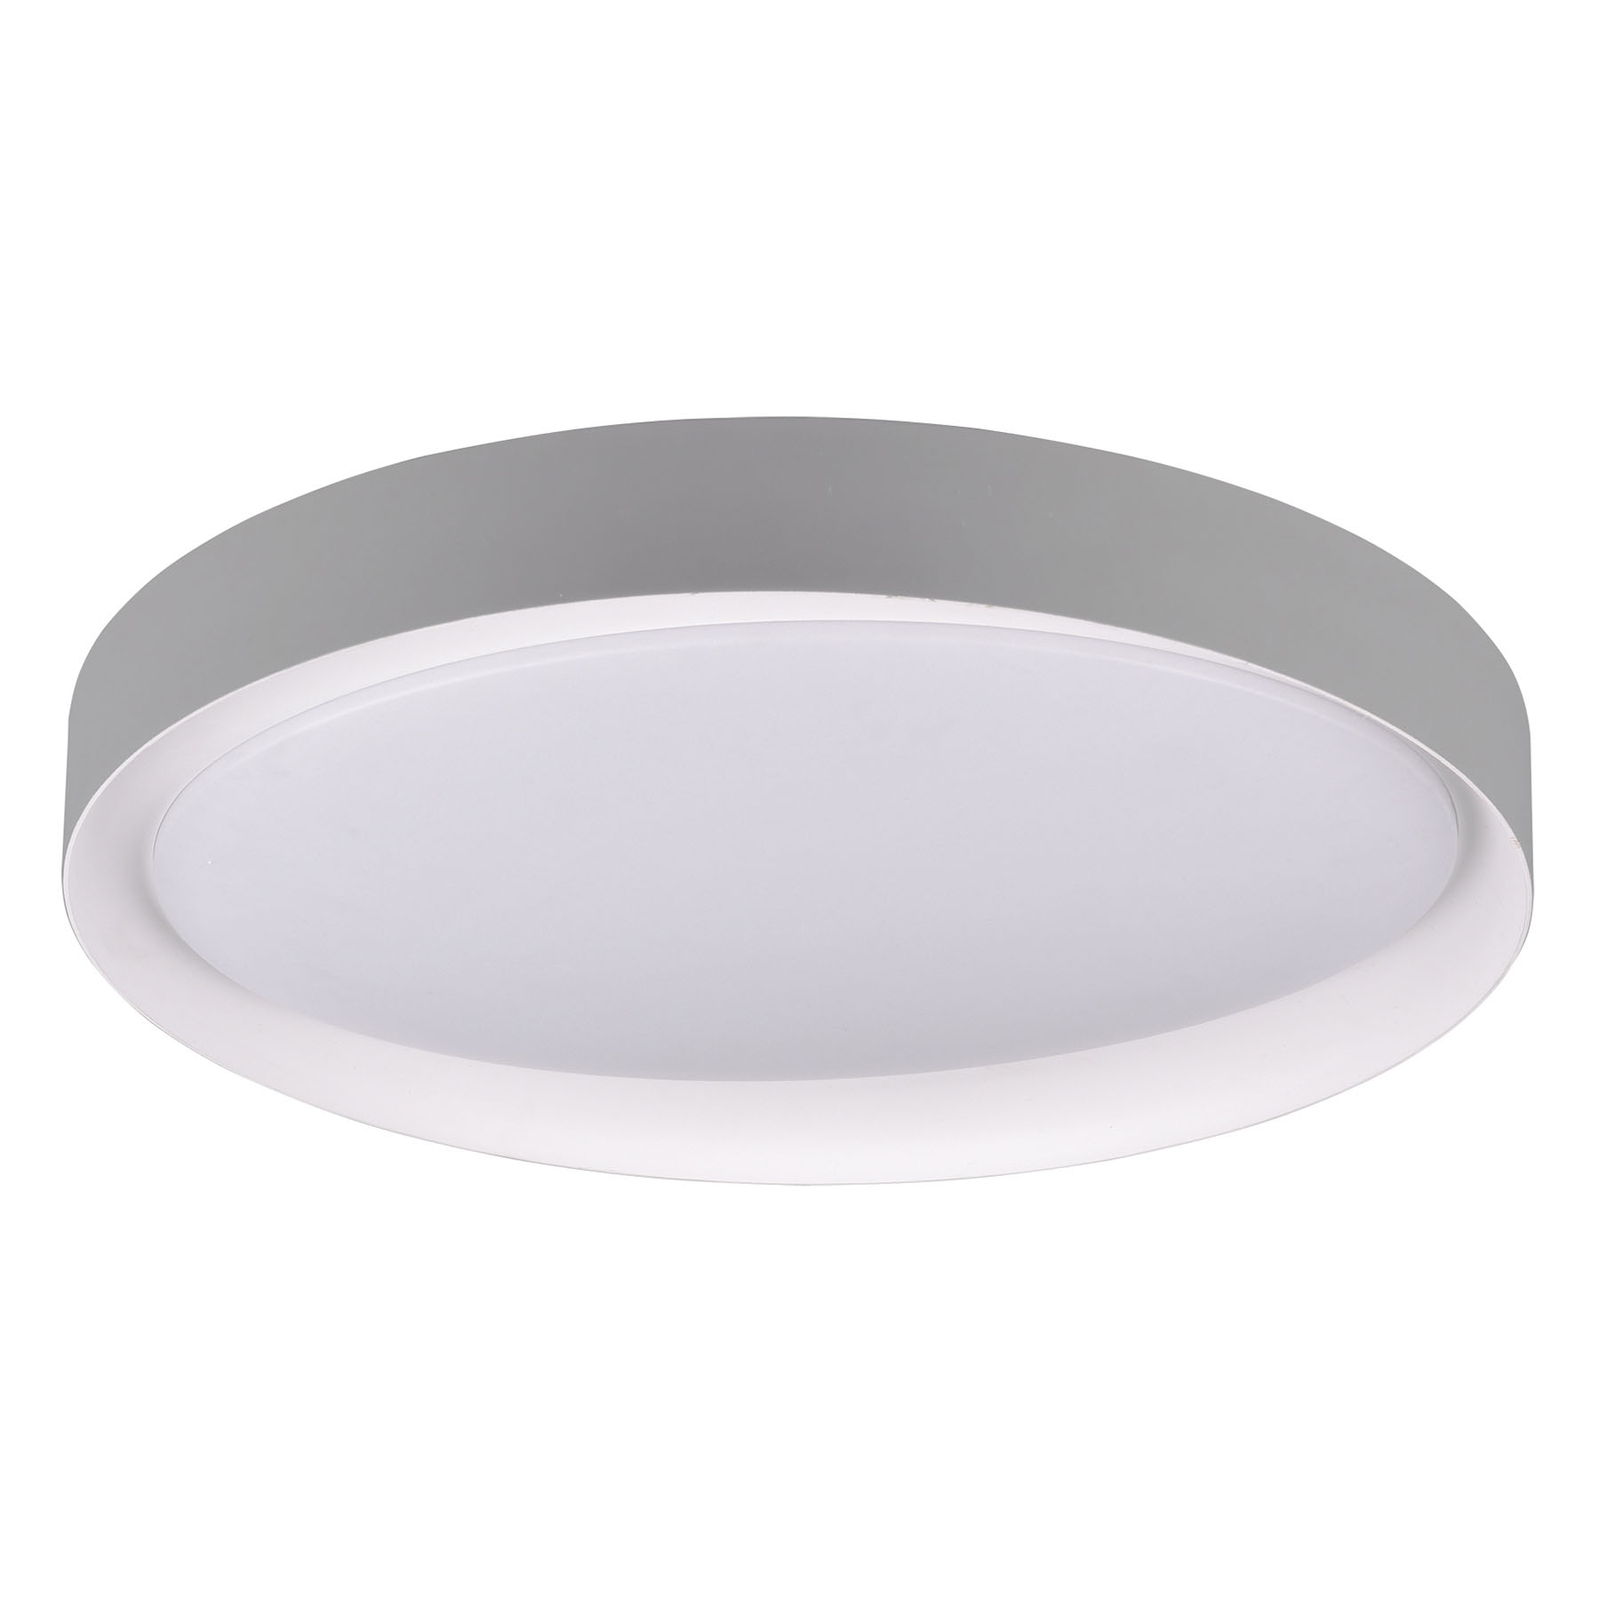 LED-taklampa Zeta tunable white, grå/vit